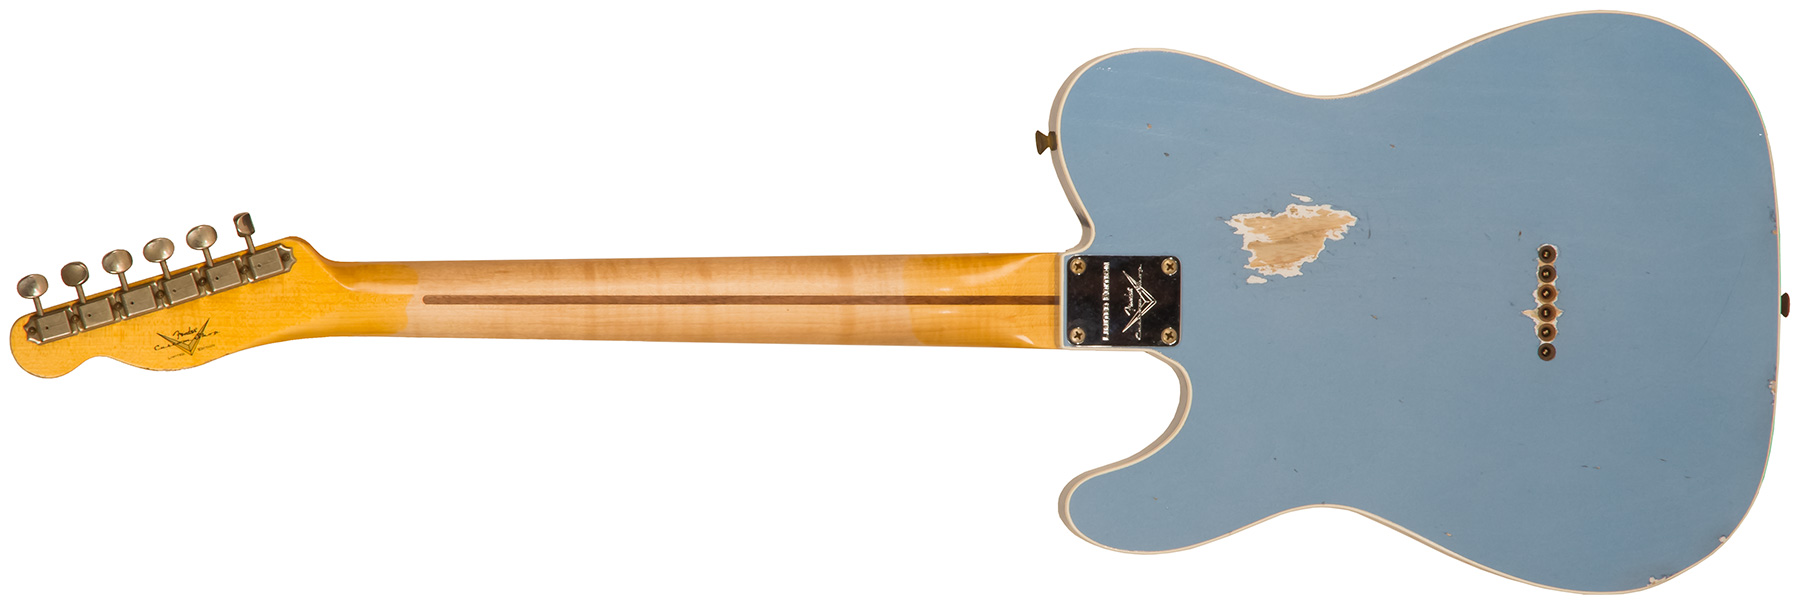 Fender Custom Shop Tele Custom Tomatillo 2s Ht Mn #r110879 - Relic Lake Placid Blue - Televorm elektrische gitaar - Variation 1